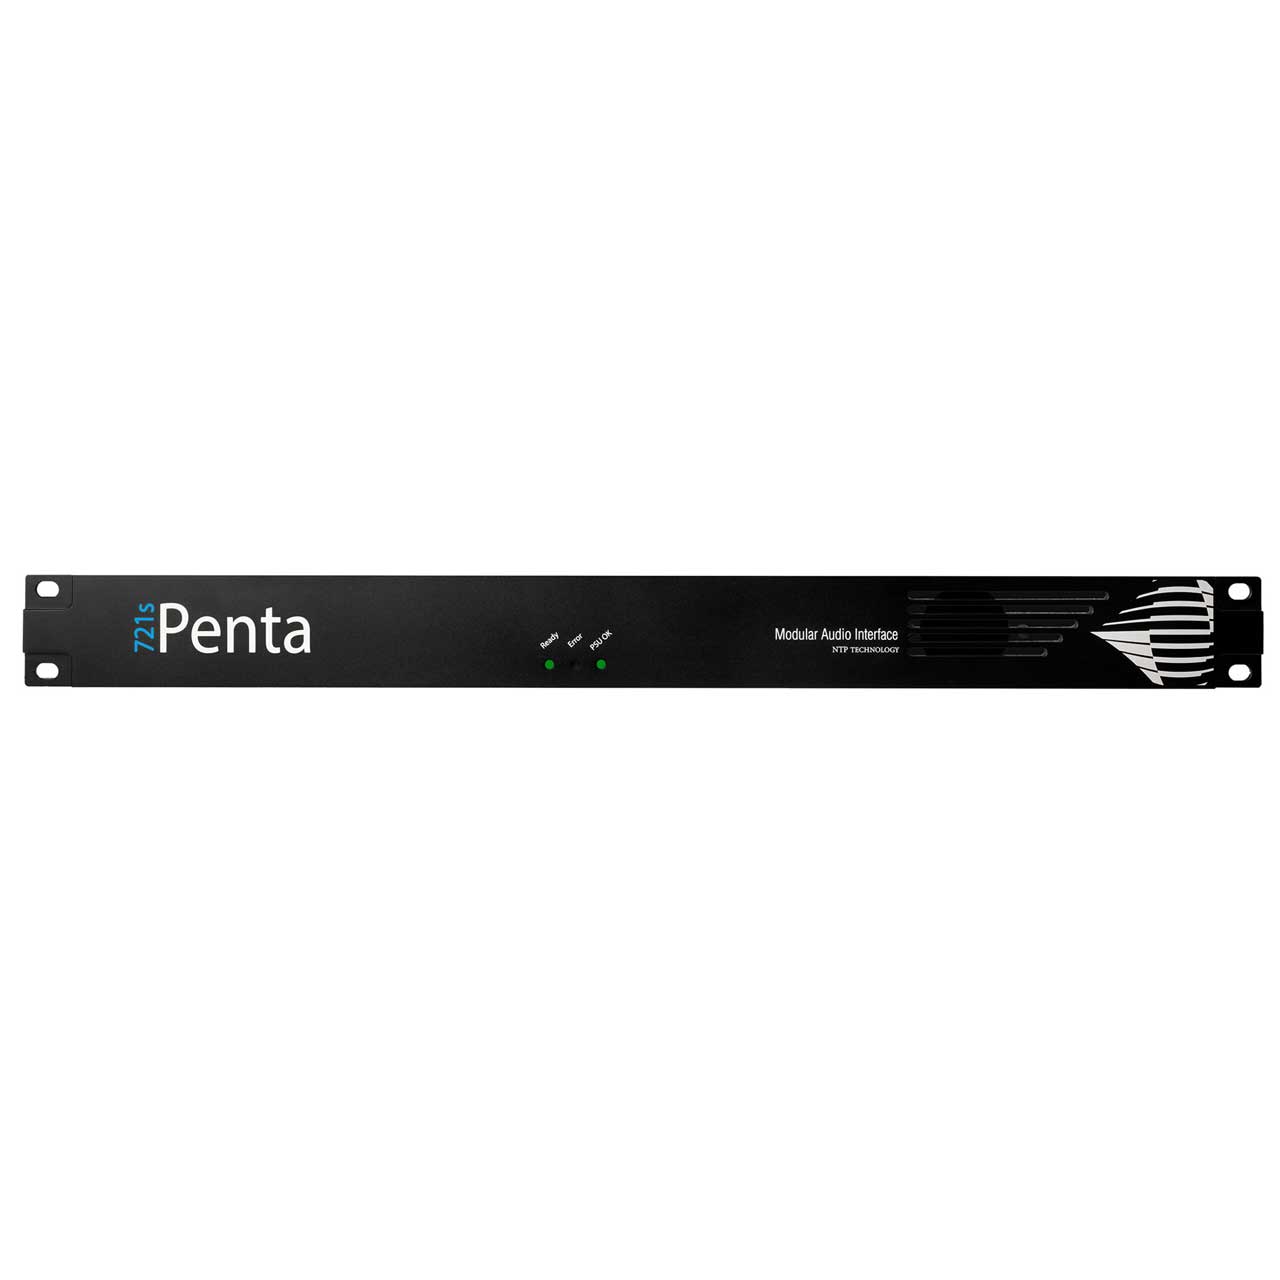 PENTA-721S-SDI Dual SDI to Dante Converter with SRC / Dual PSU and Dual Power Socket PENTA-721S-SDI